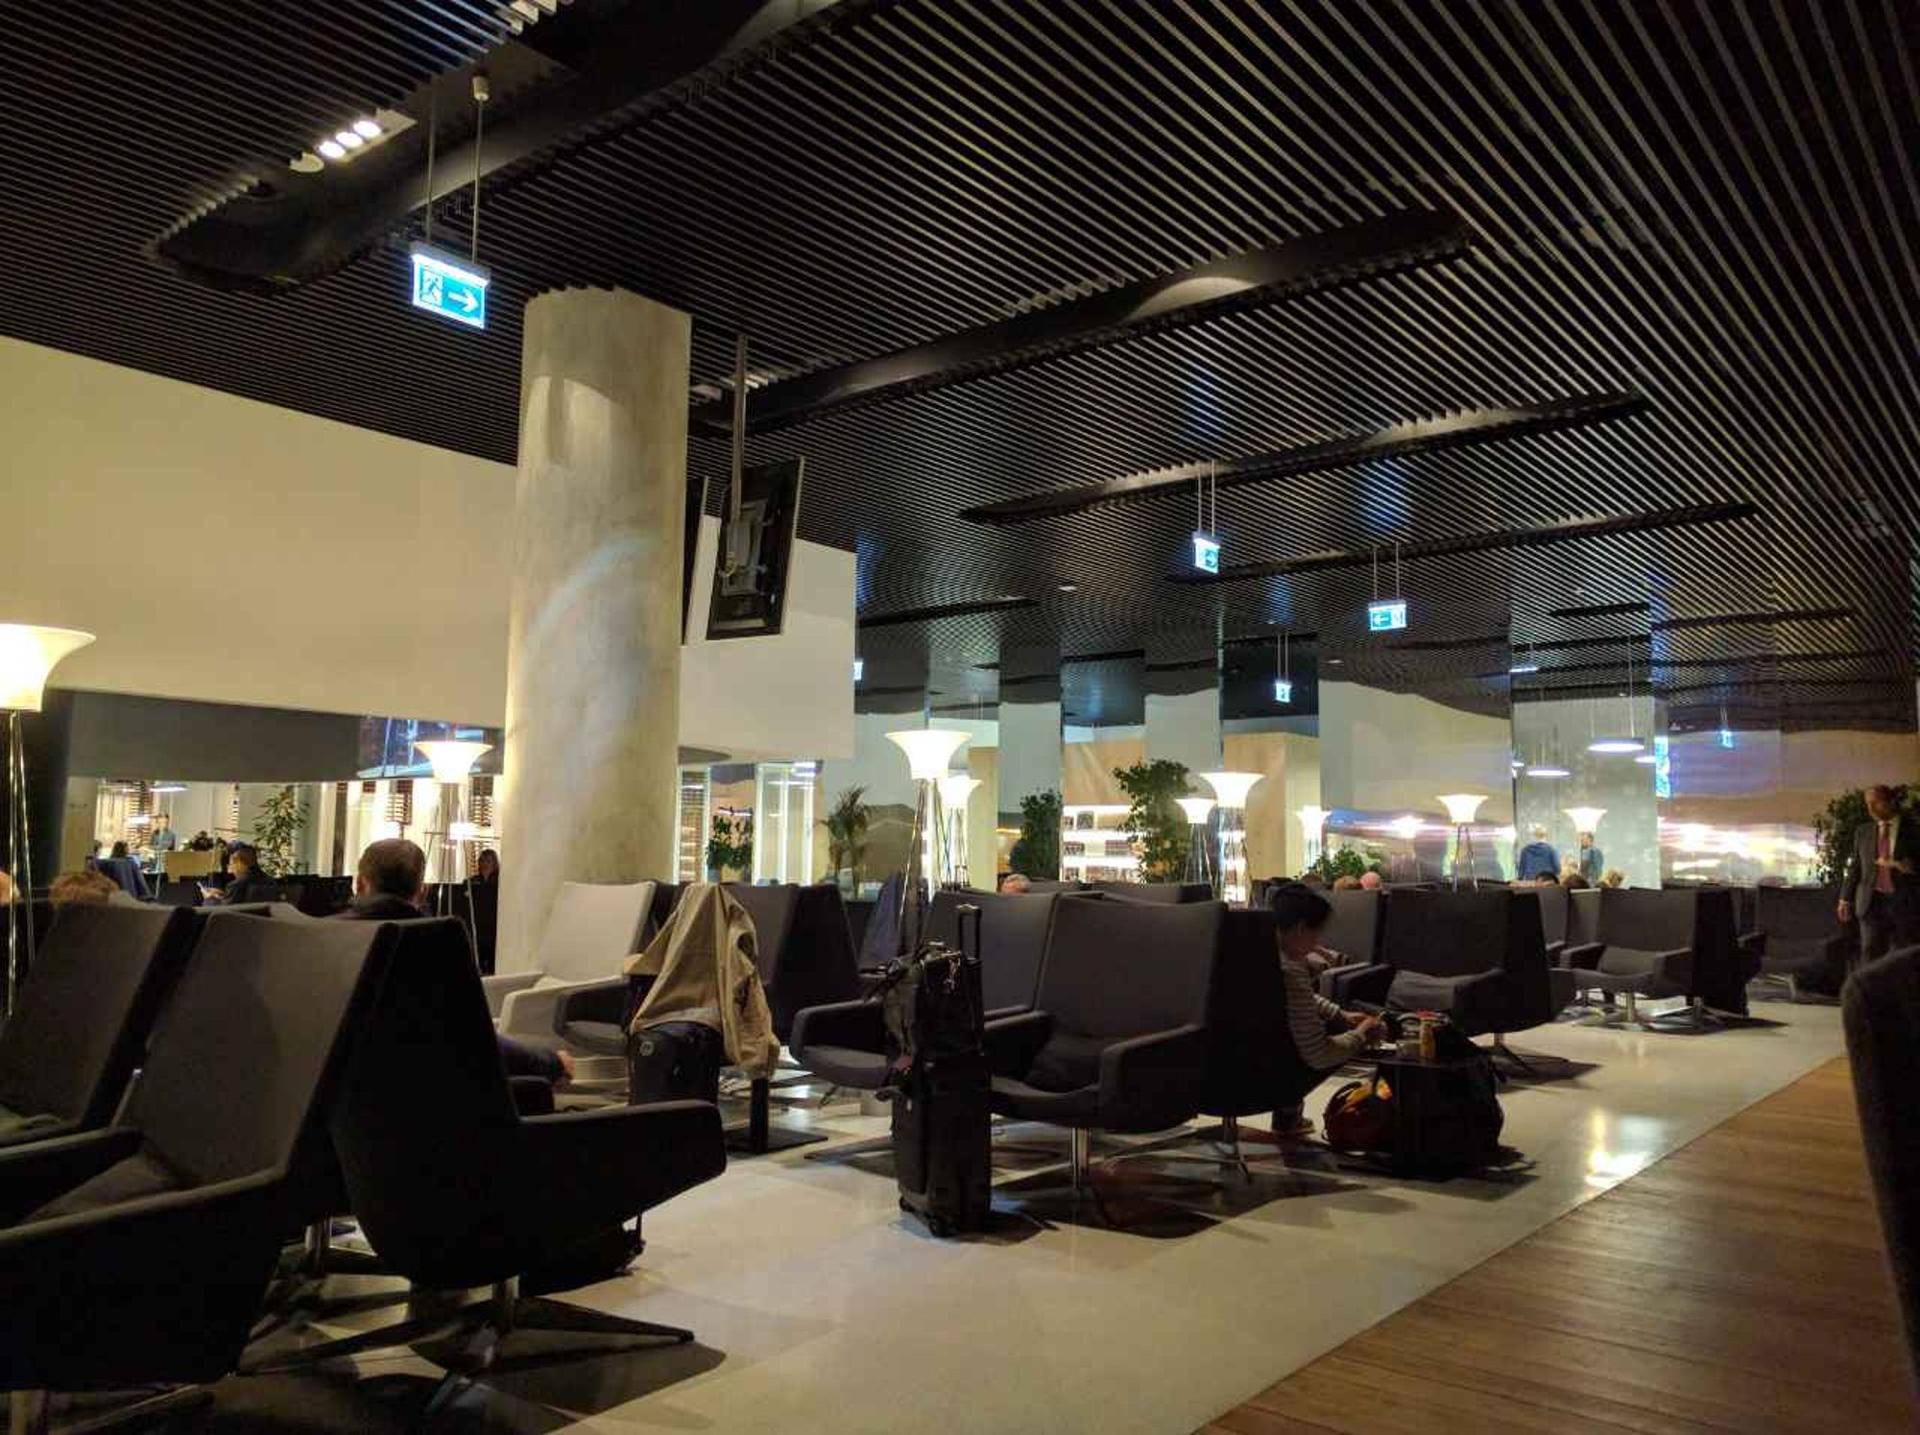 ANA Airport Lounge image 17 of 49